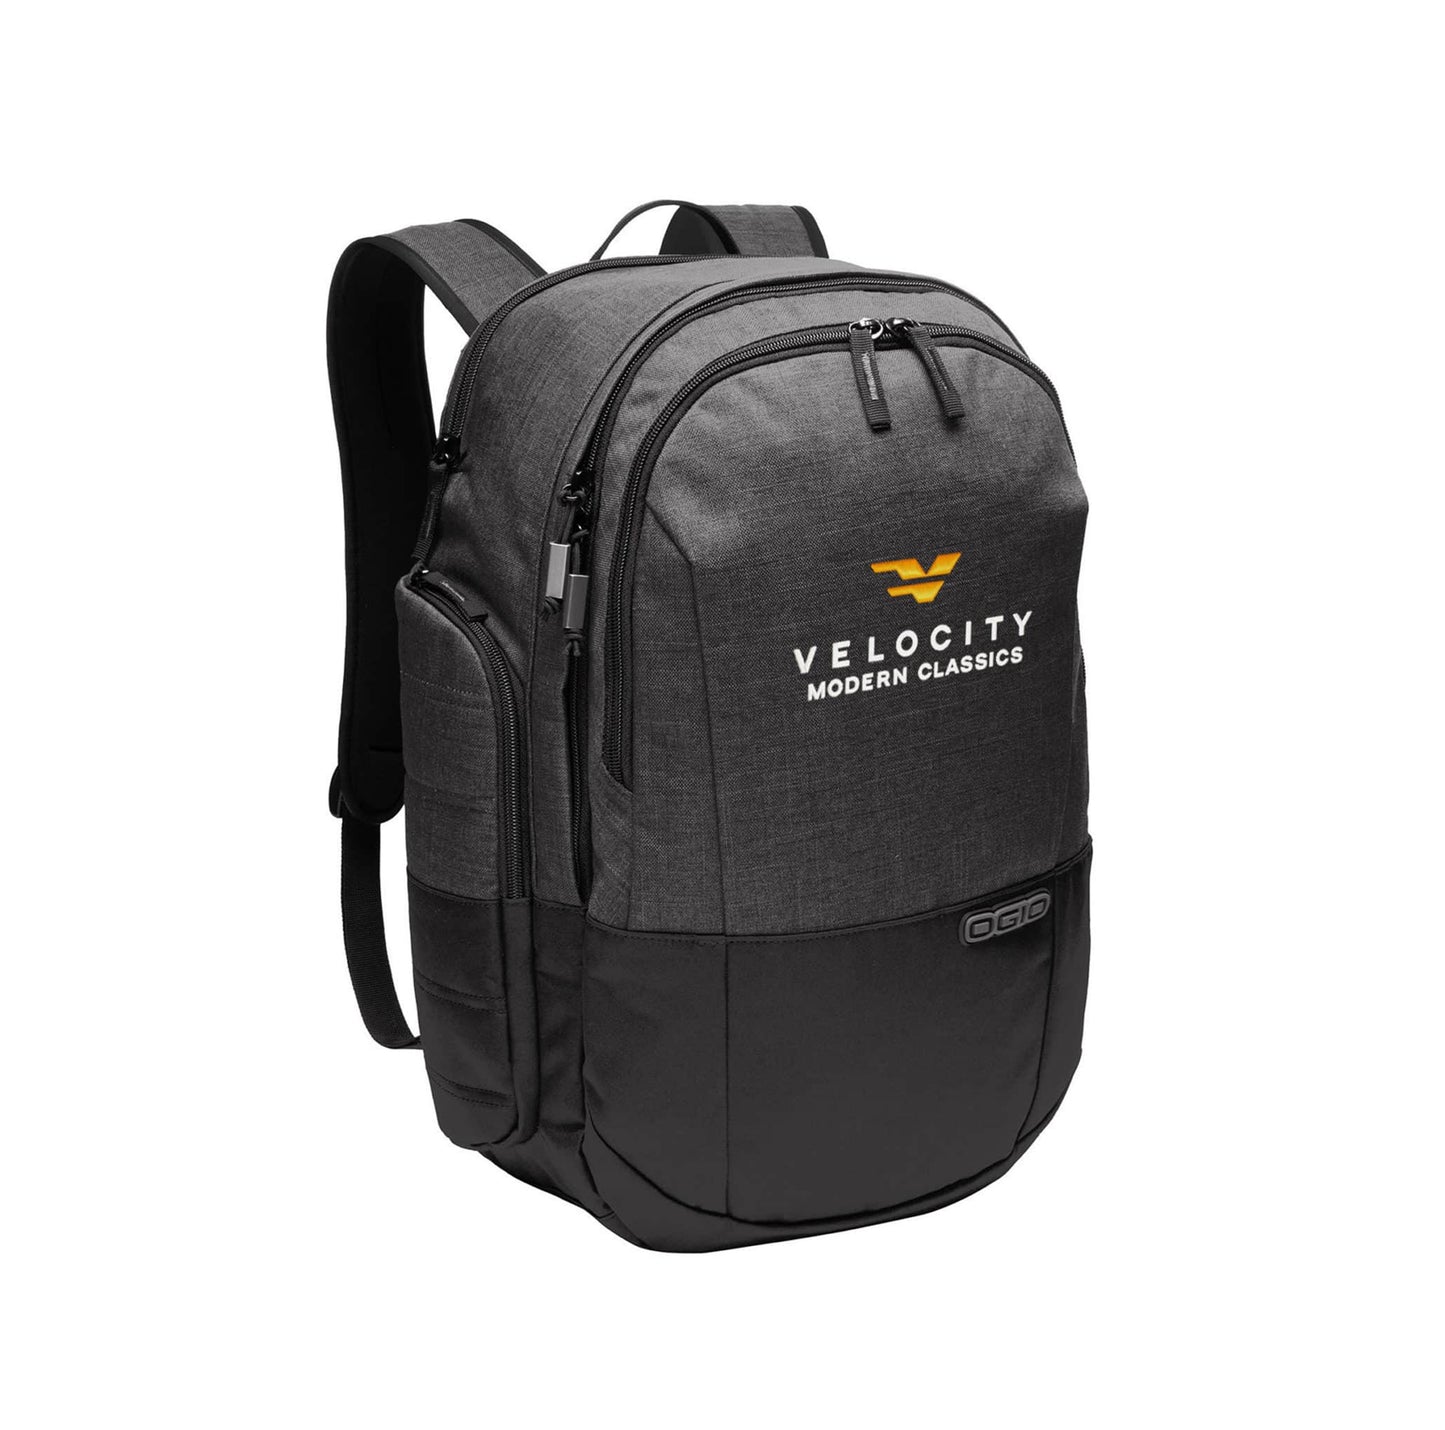 Velocity Rockwell Grey Backpack